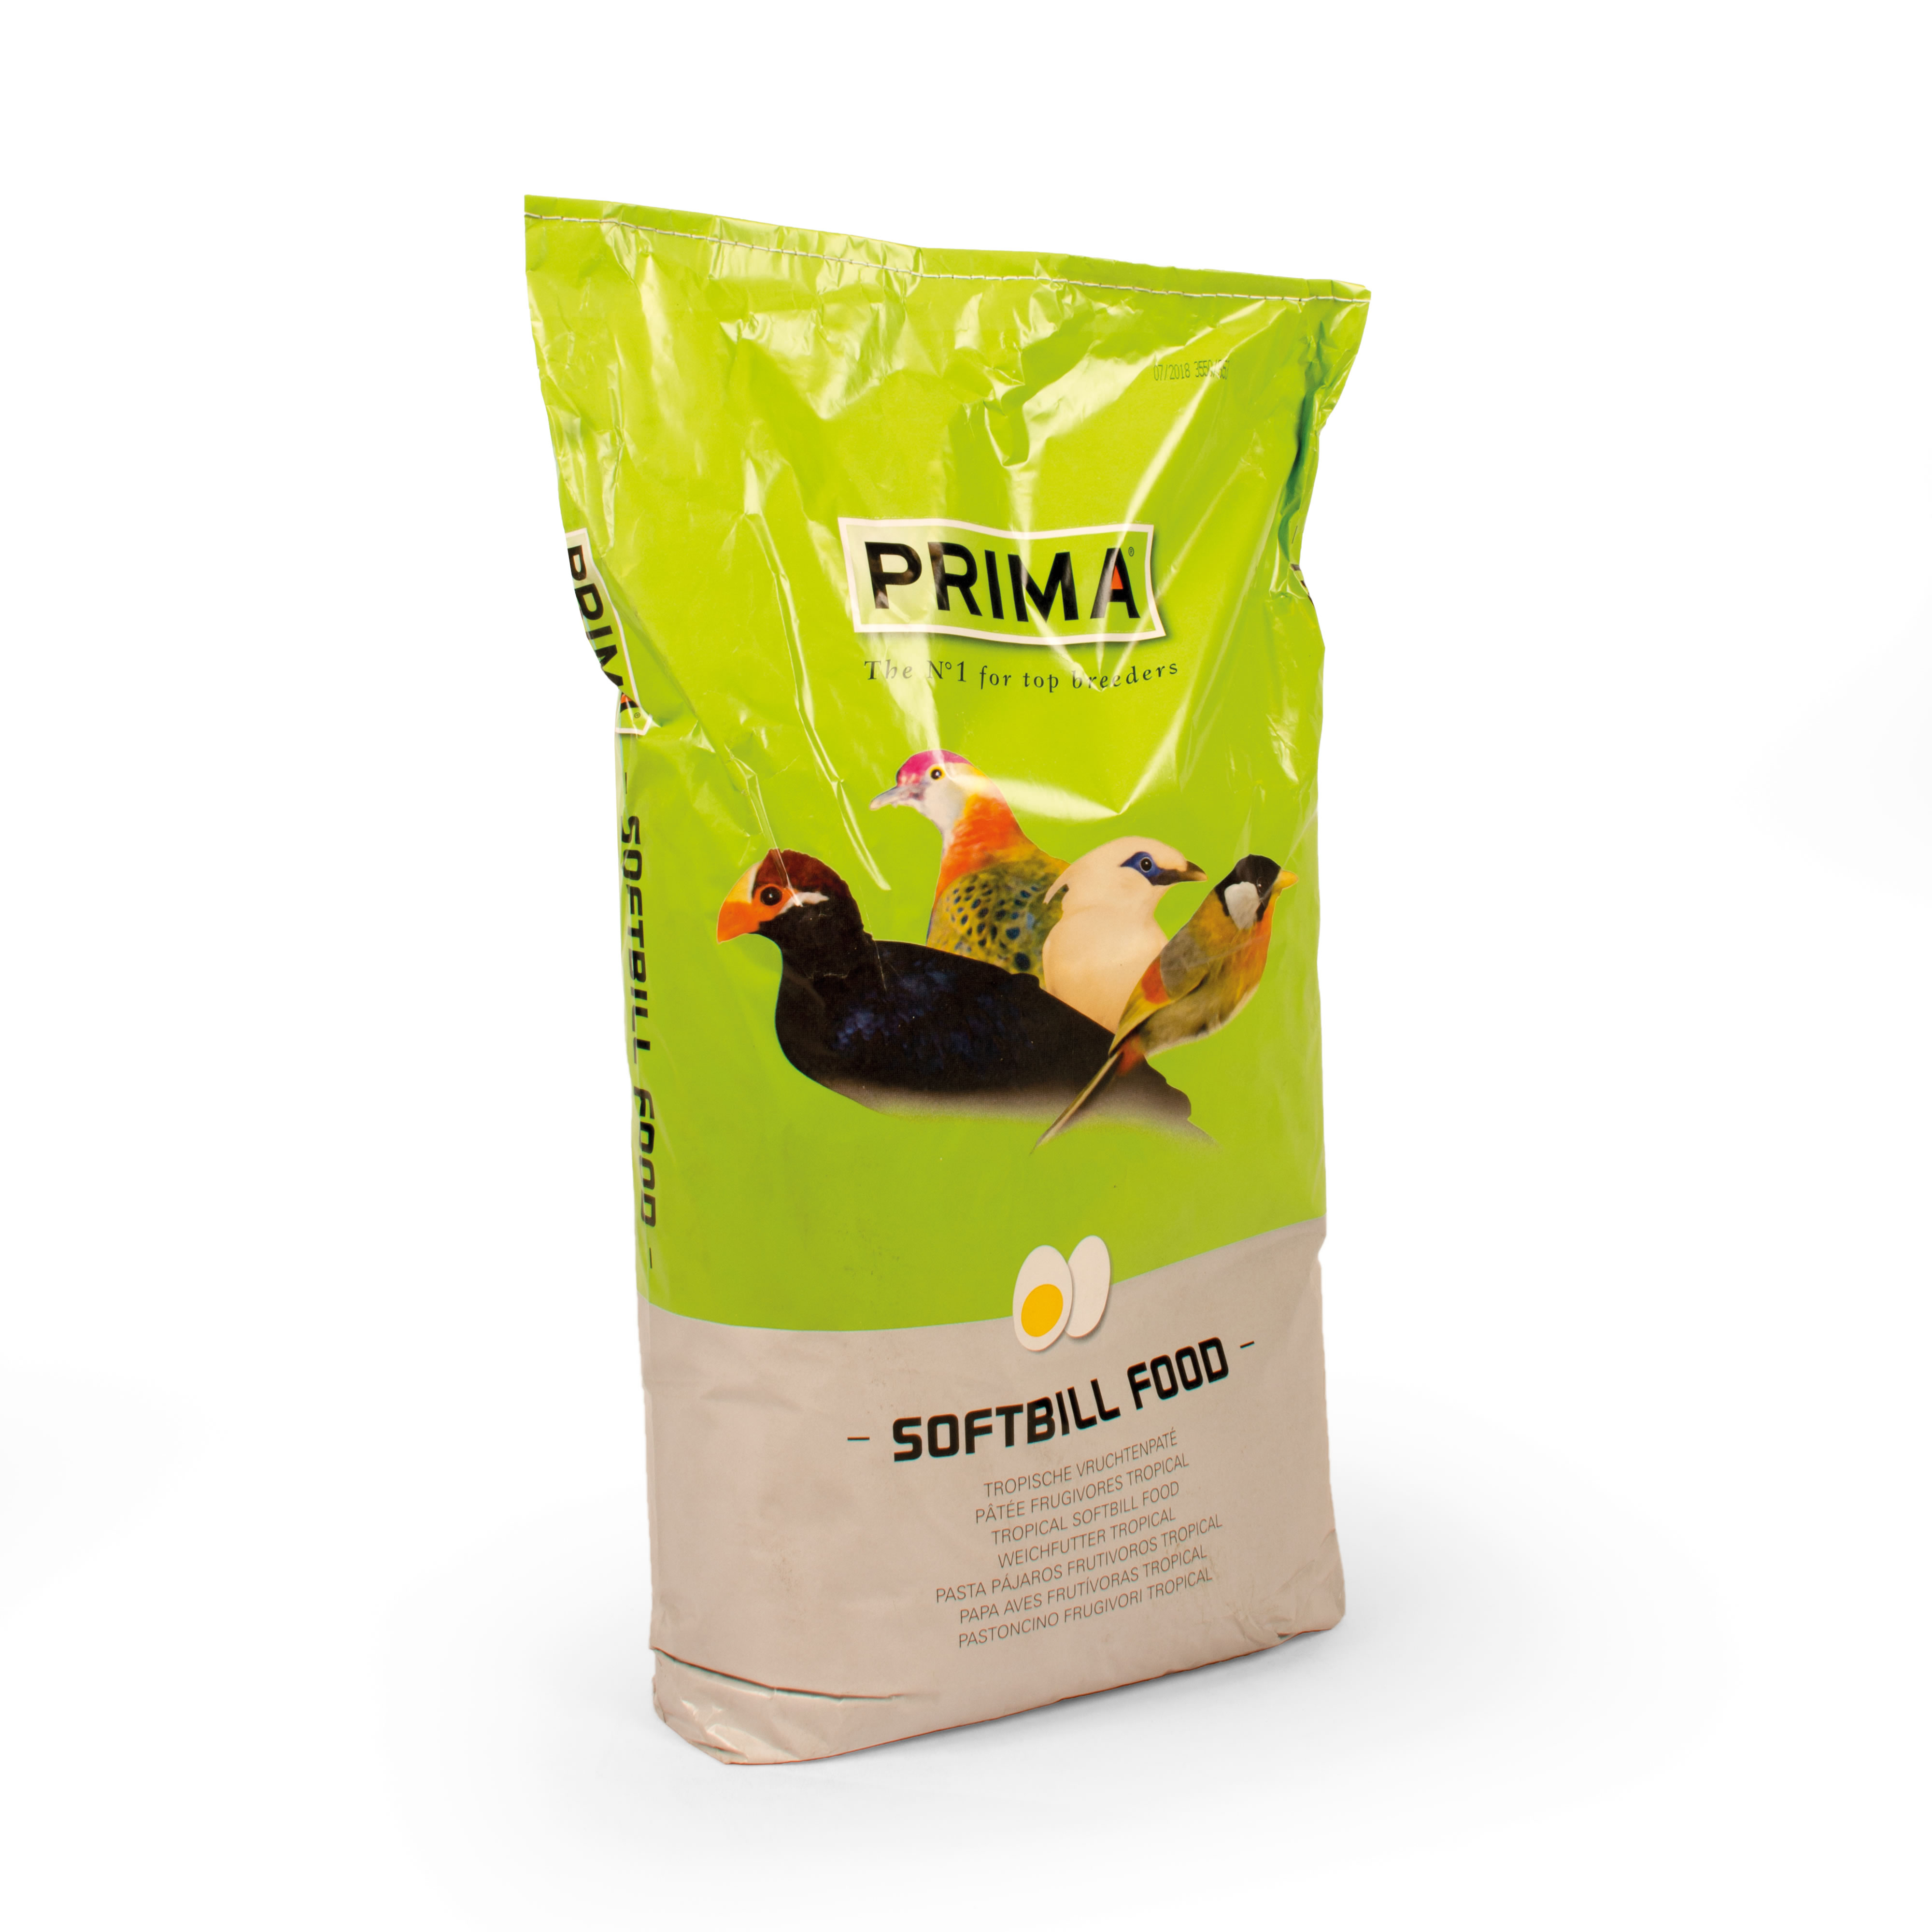 Prima eggfood paste tropical birds - Product shot